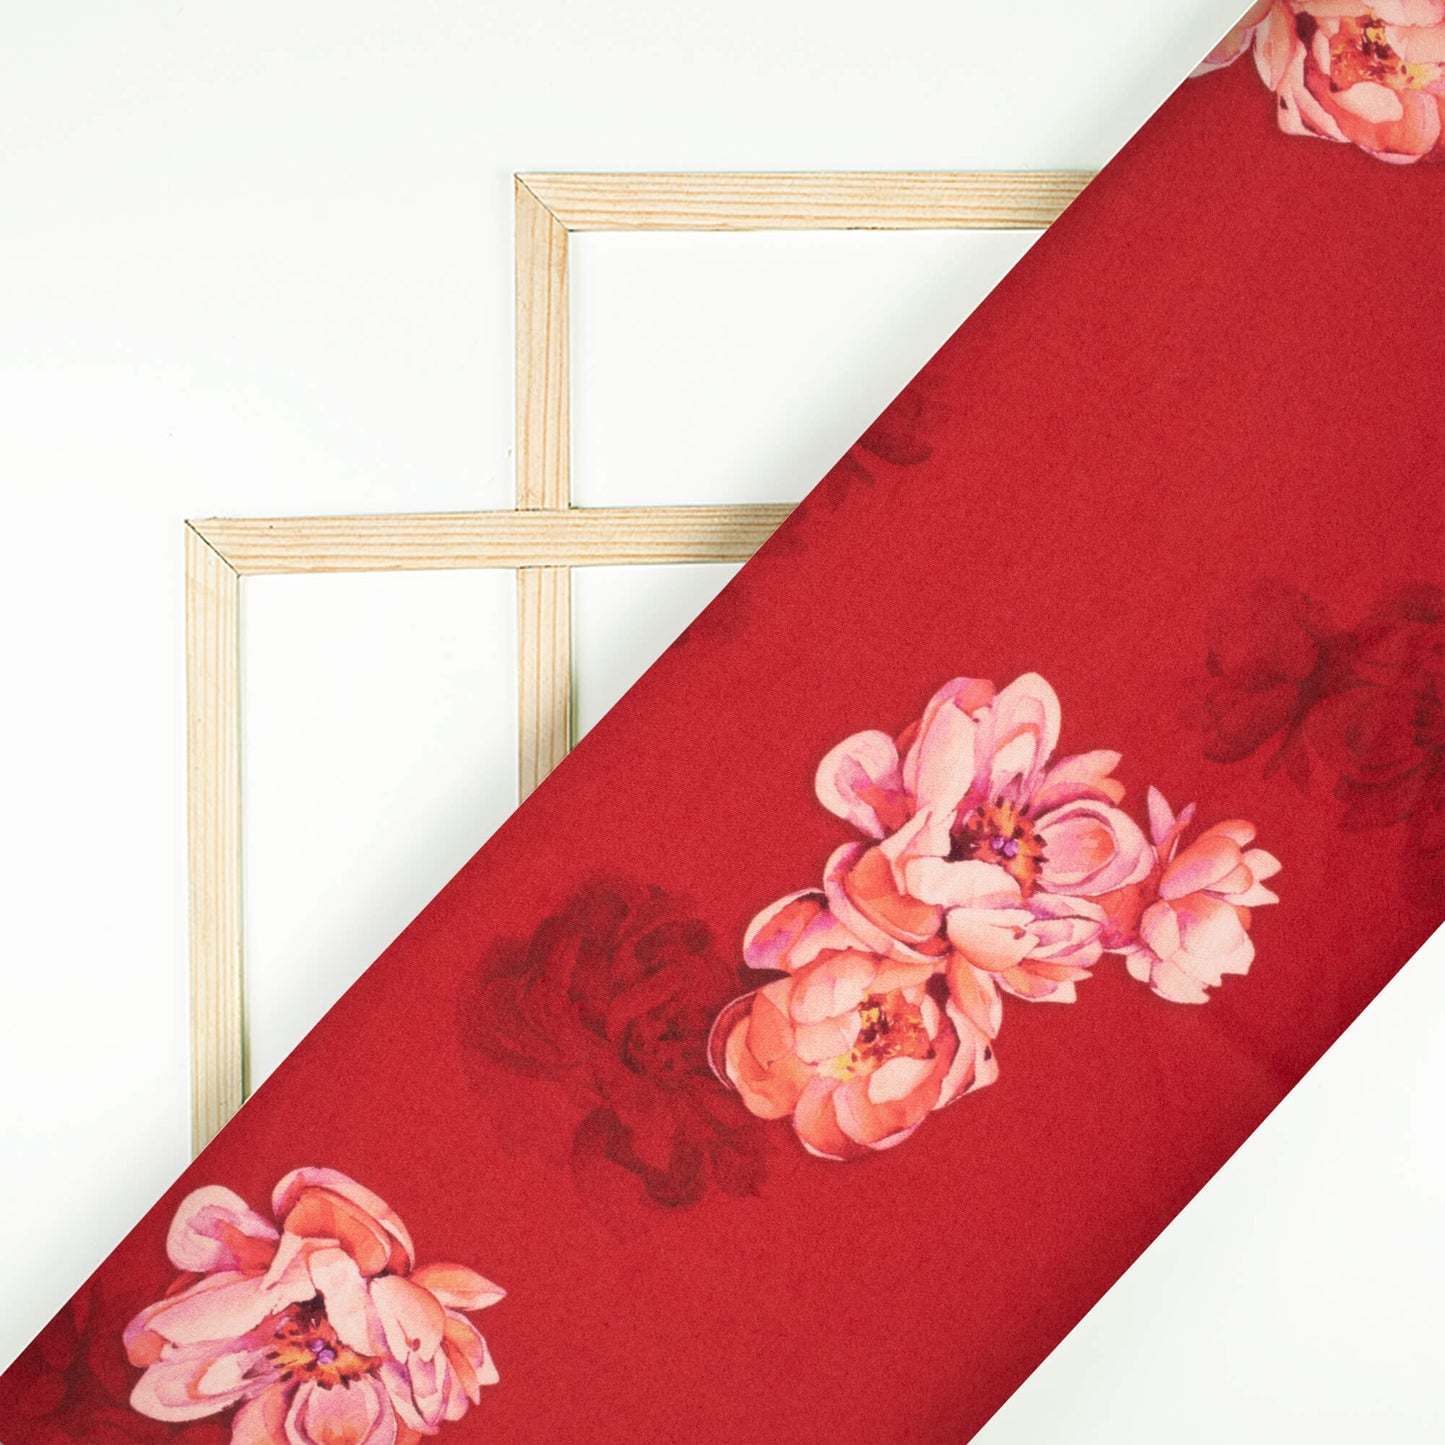 Vermilion Red And Pink Floral Pattern Digital Print Premium Lush Satin Fabric